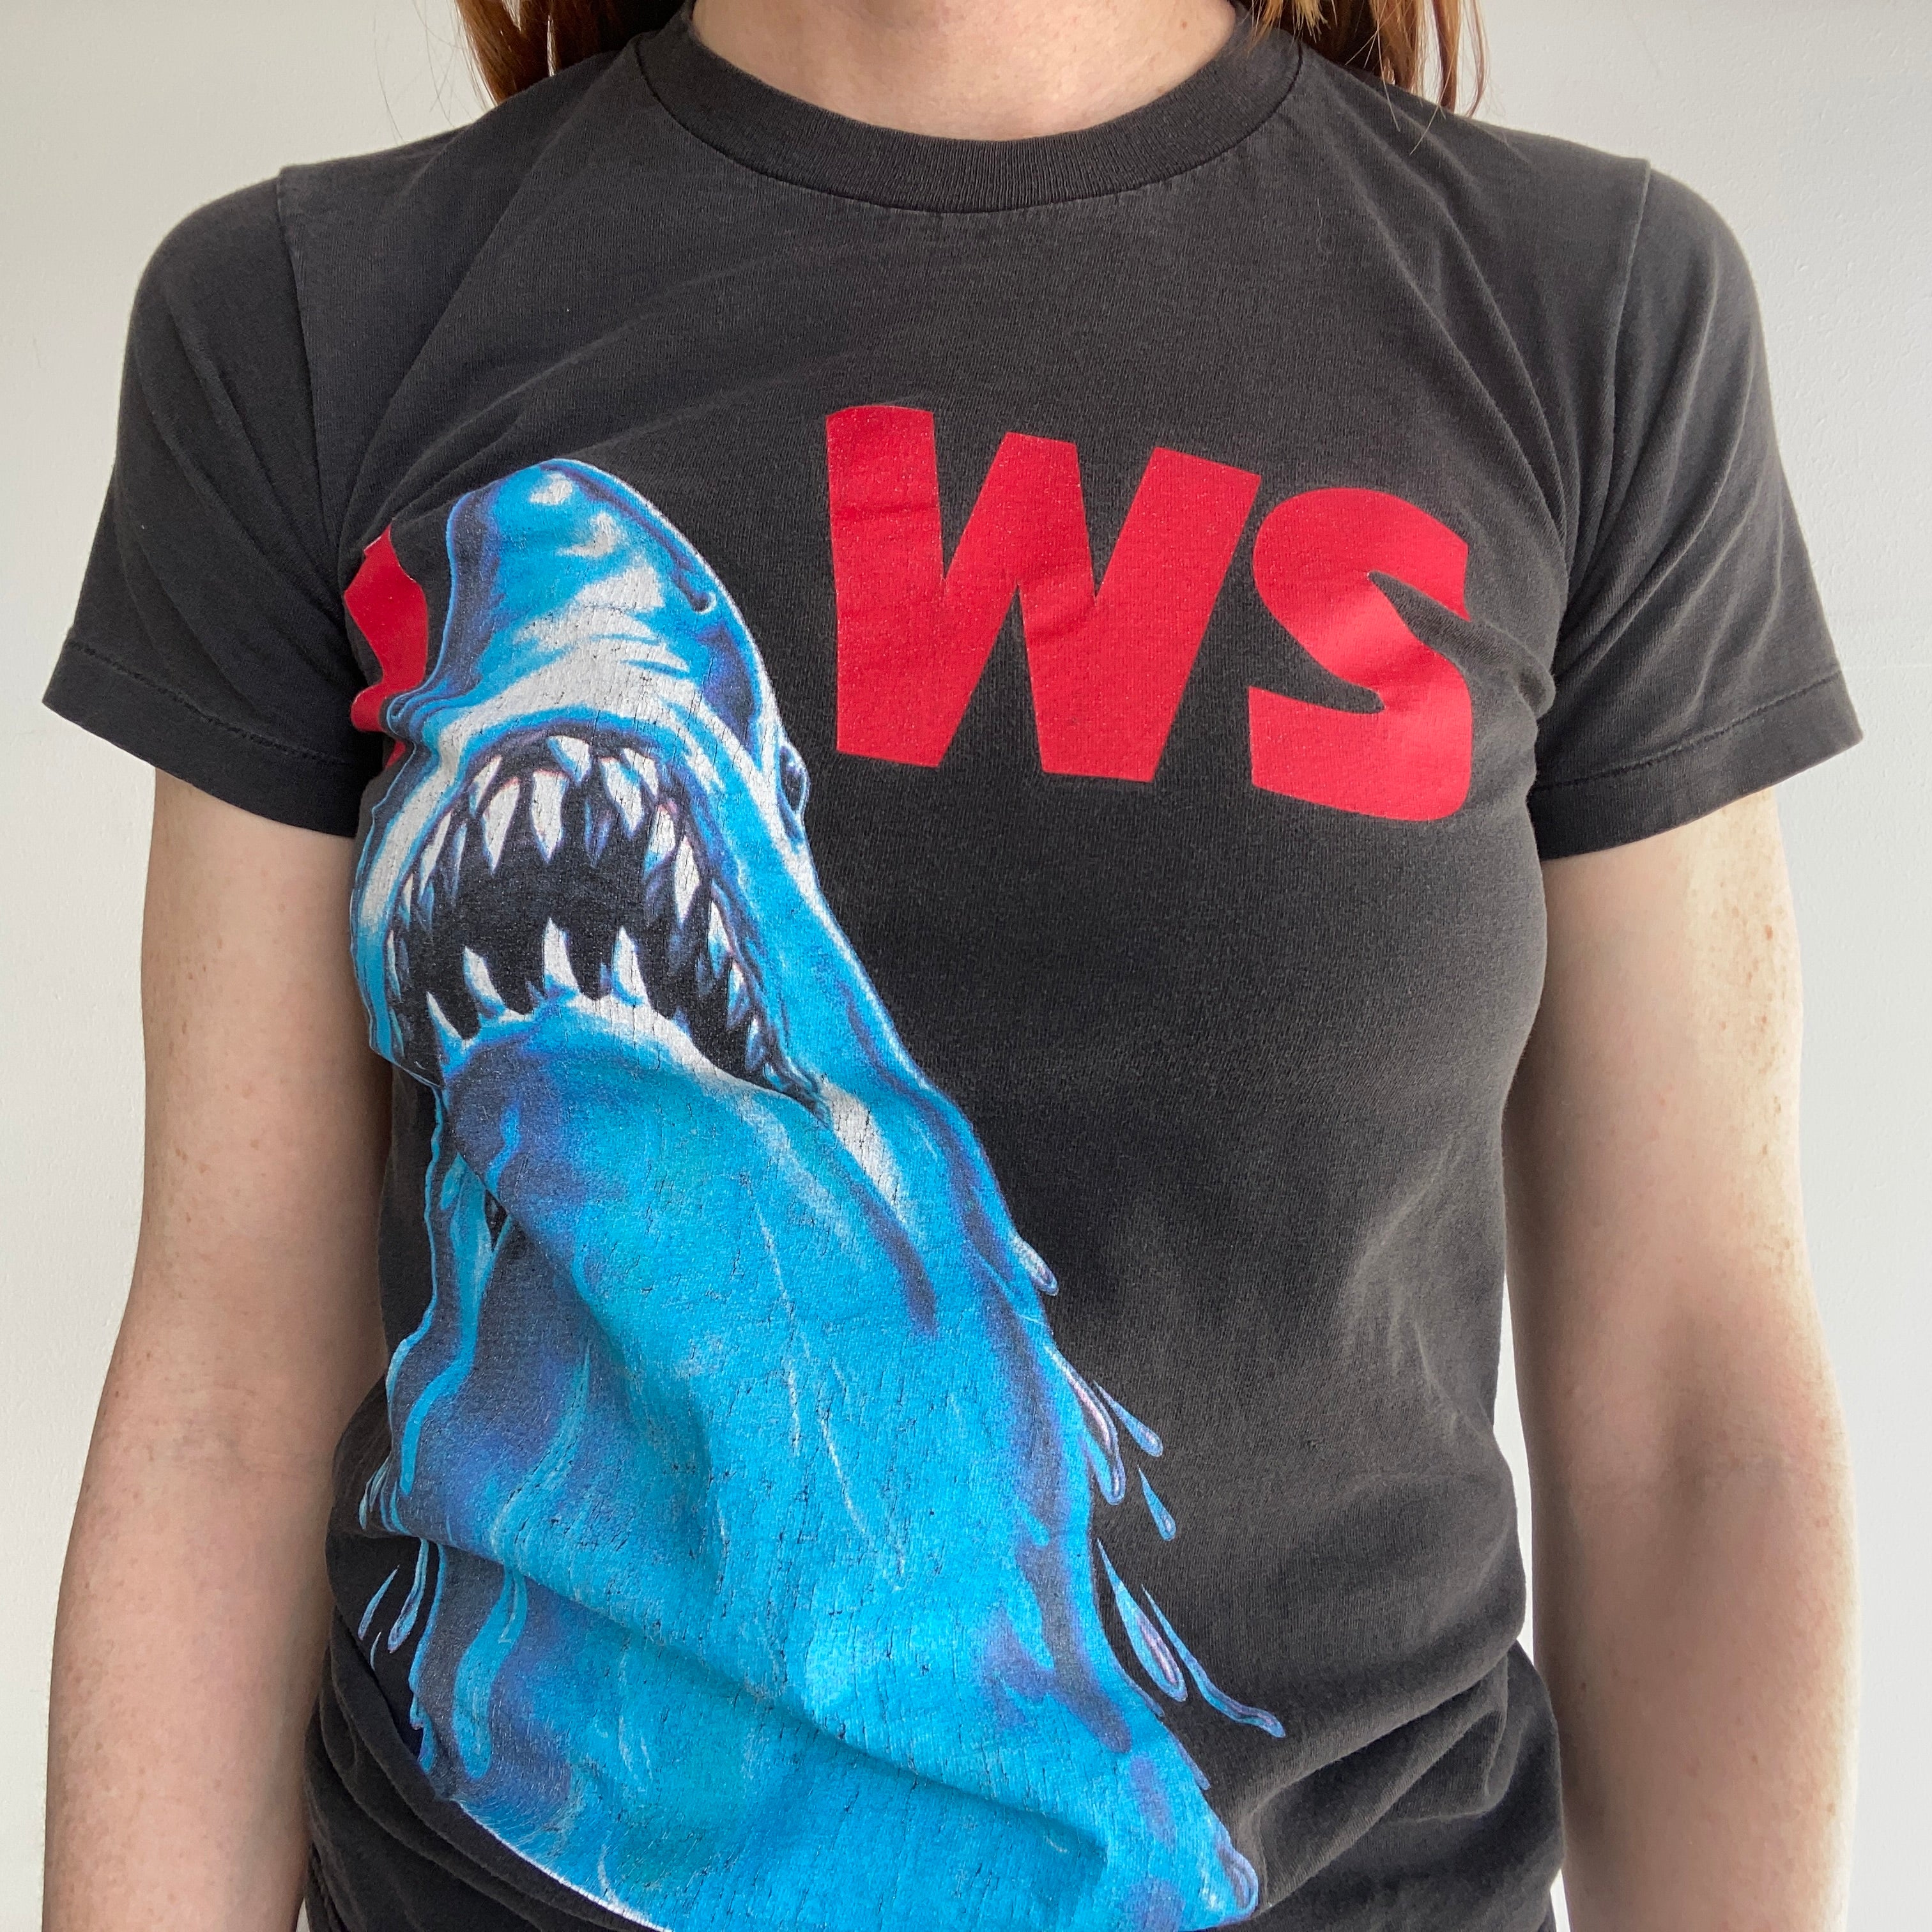 1993 Jaws Universal Studio T-shirt enfant